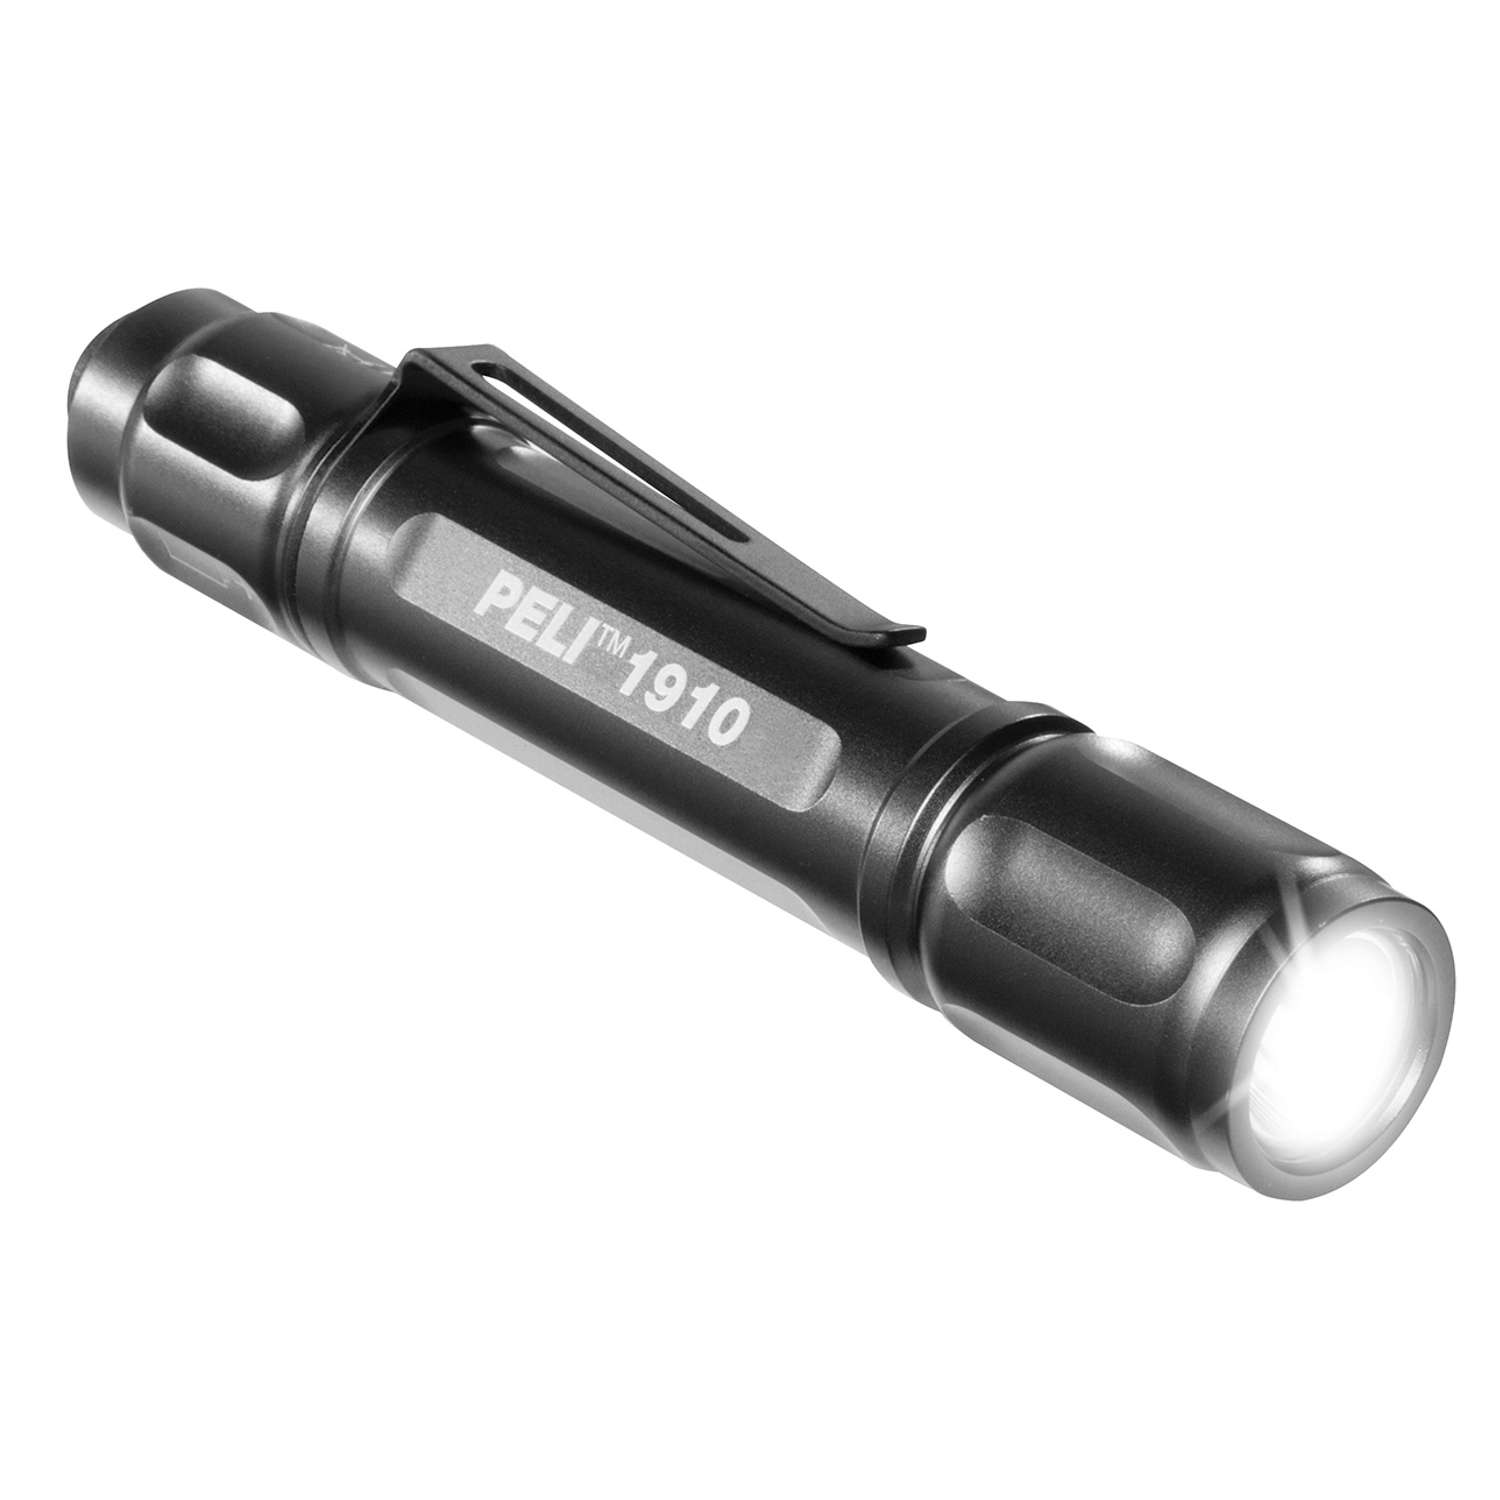 Peli™ 1910 LED-Taschenlampe schwarz, inkl. Batterien